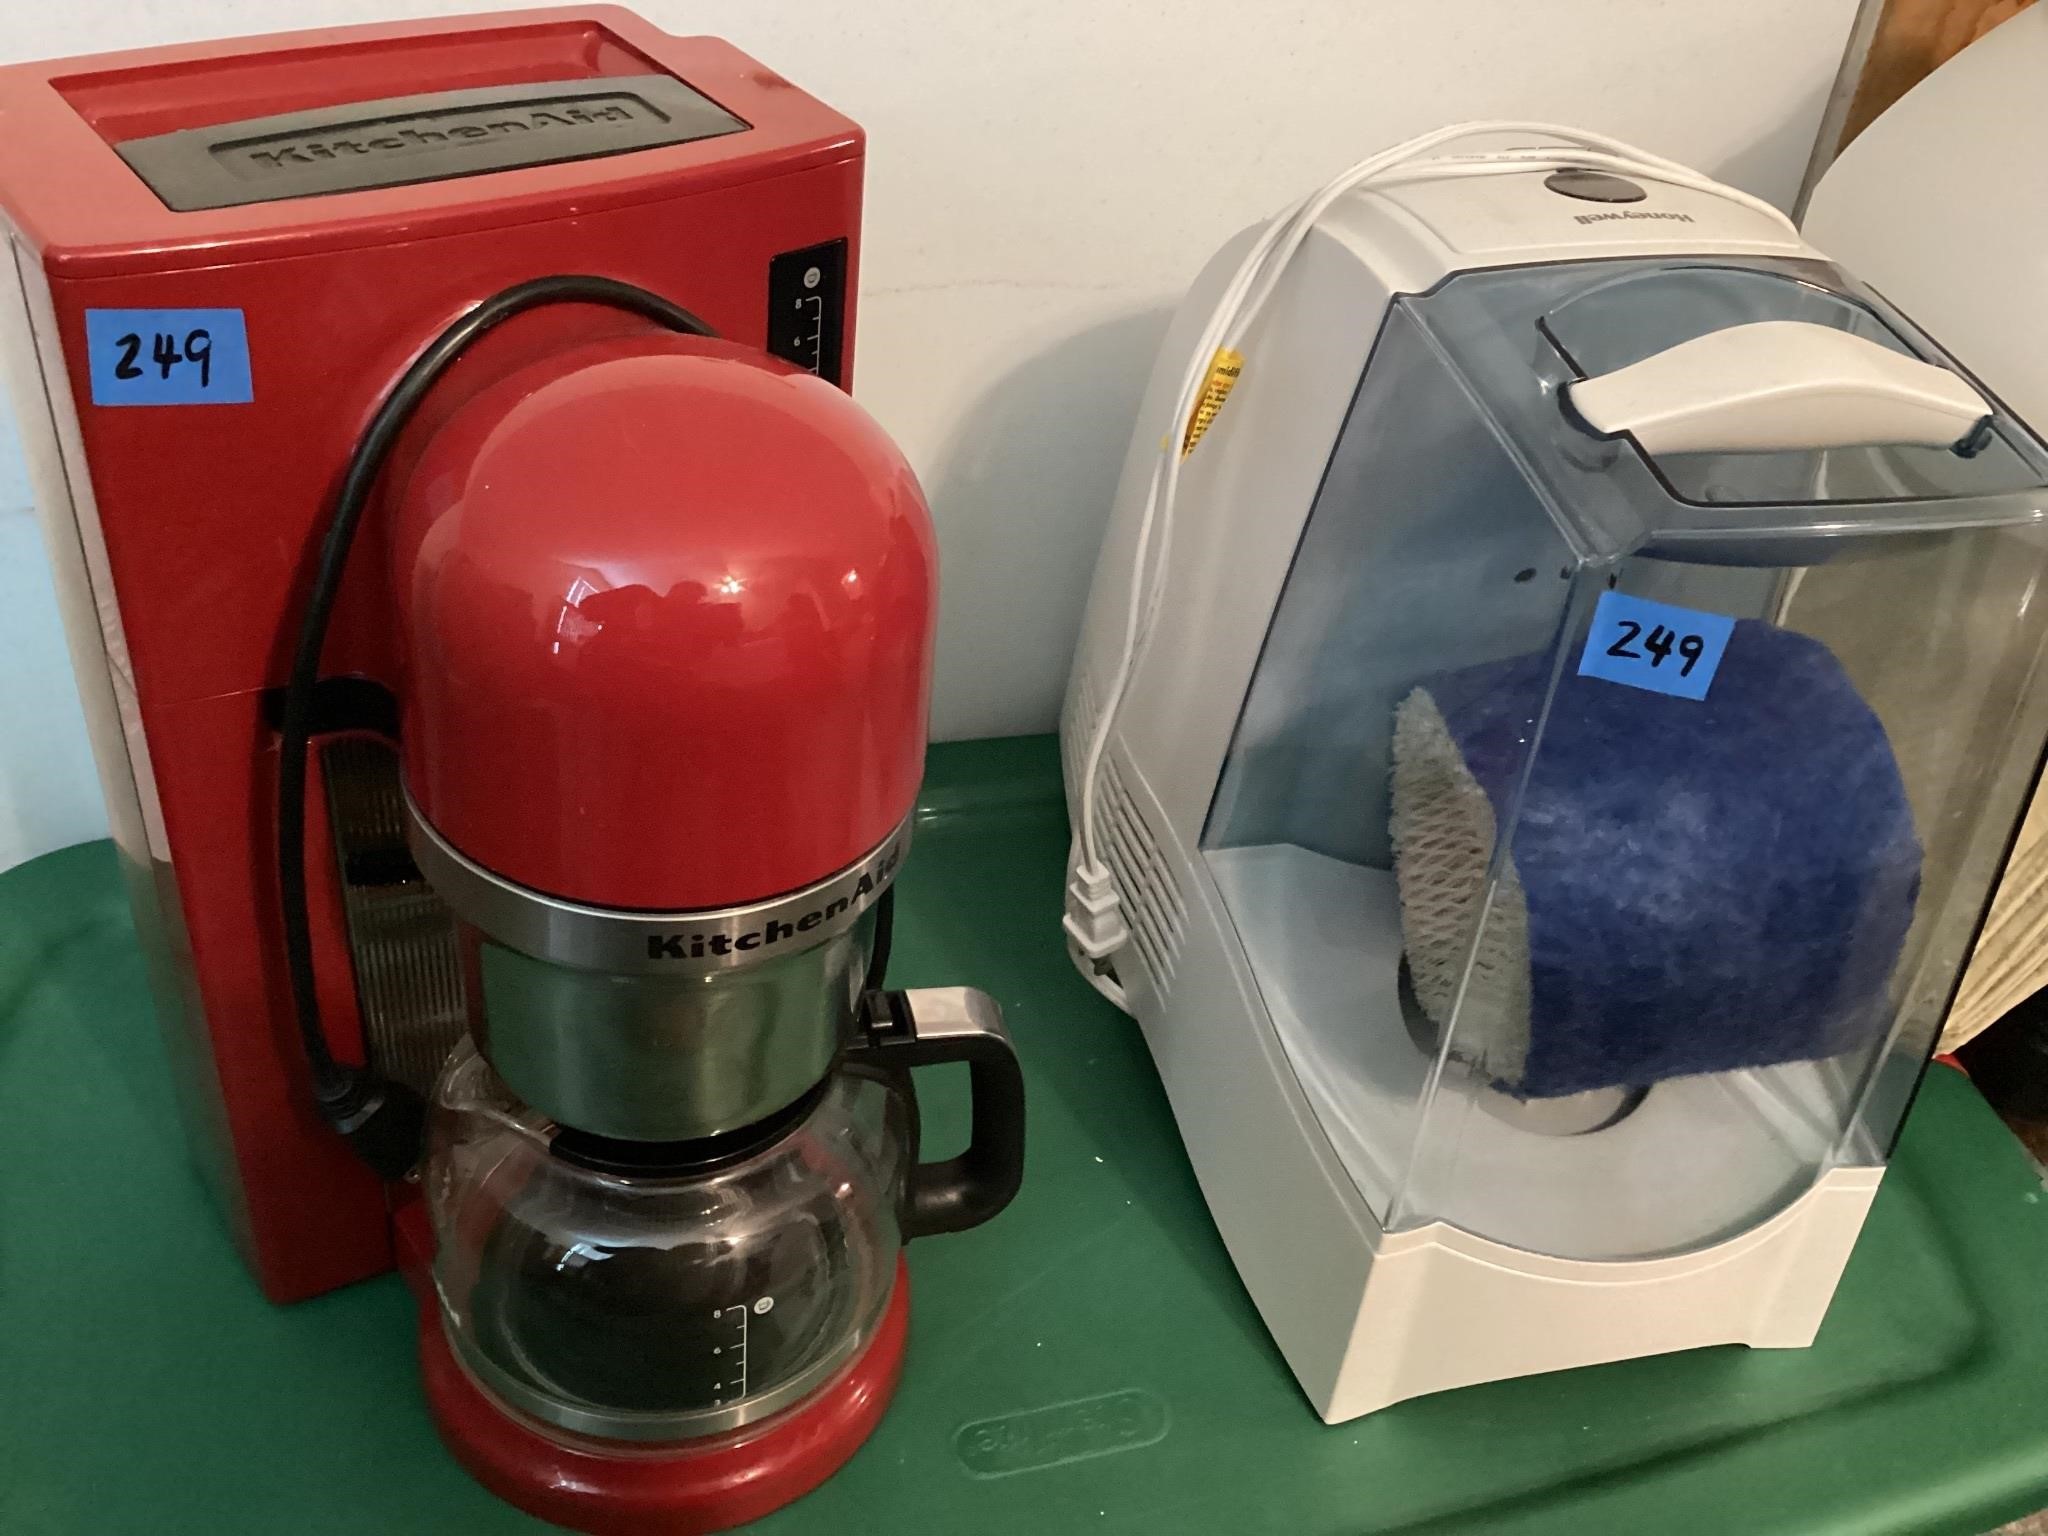 Kitchen aid coffeemaker, Honeywell vaporizer